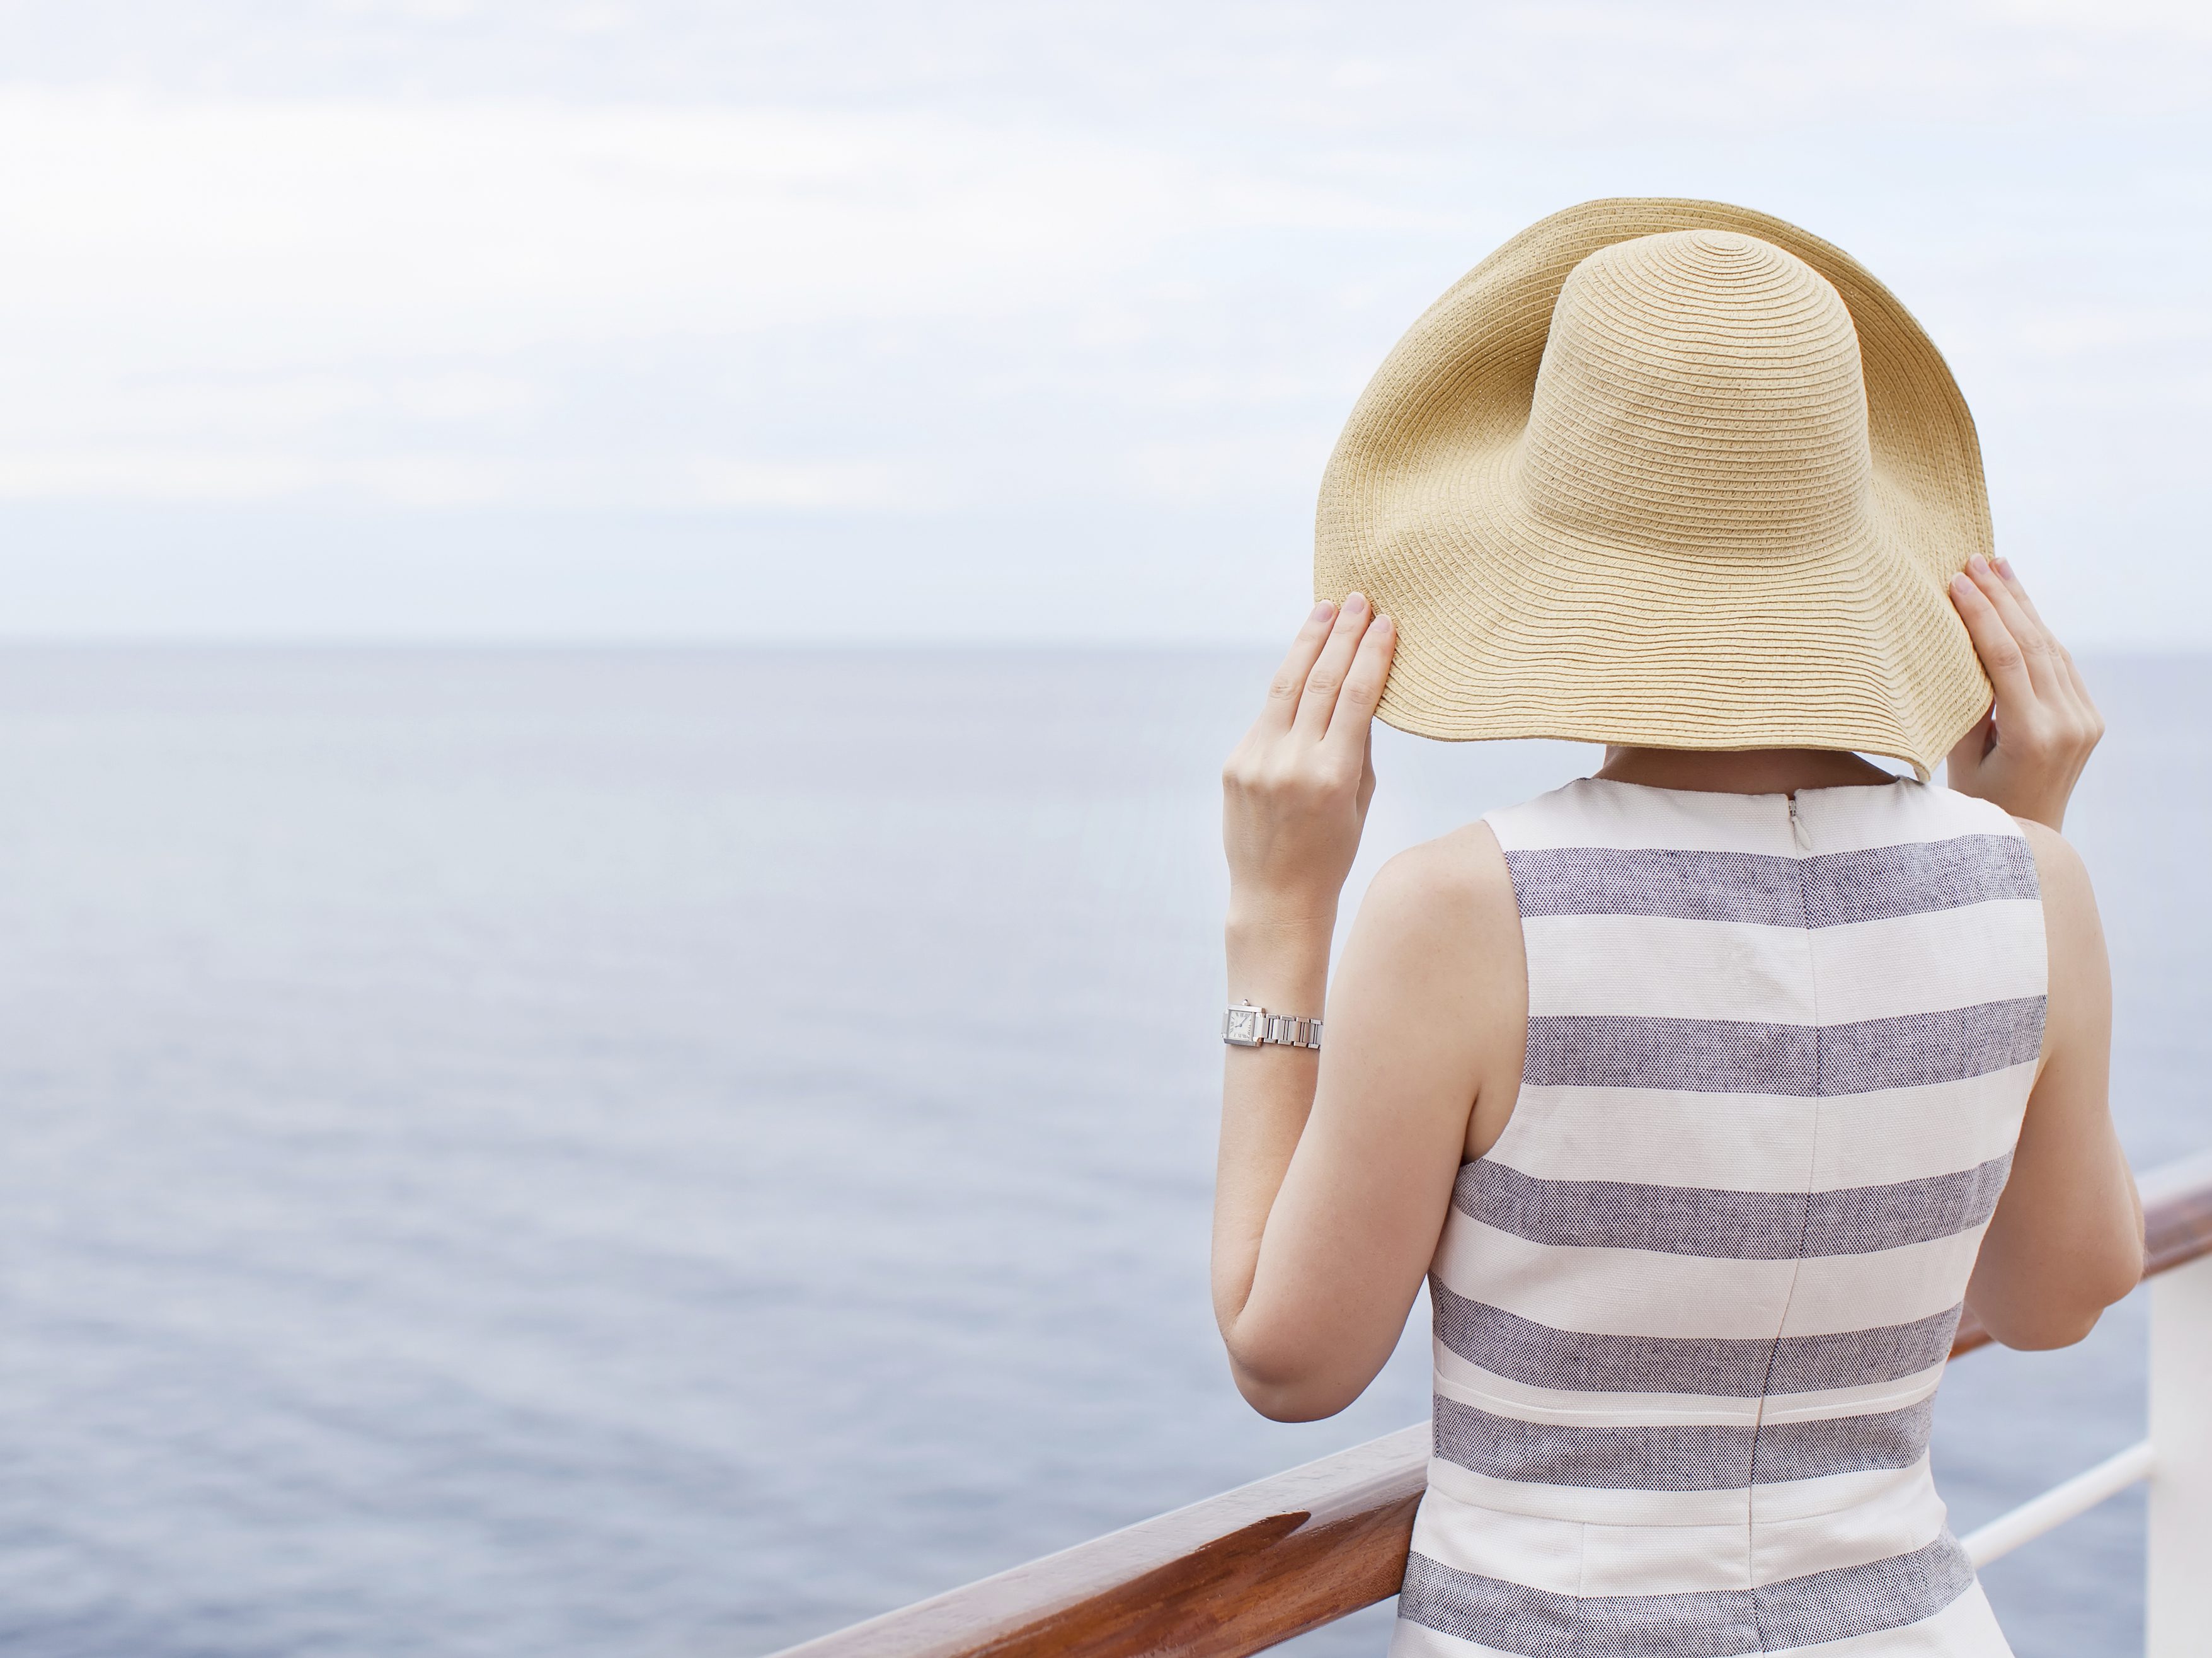 Destination therapist: Beauty life on board a cruise ship.